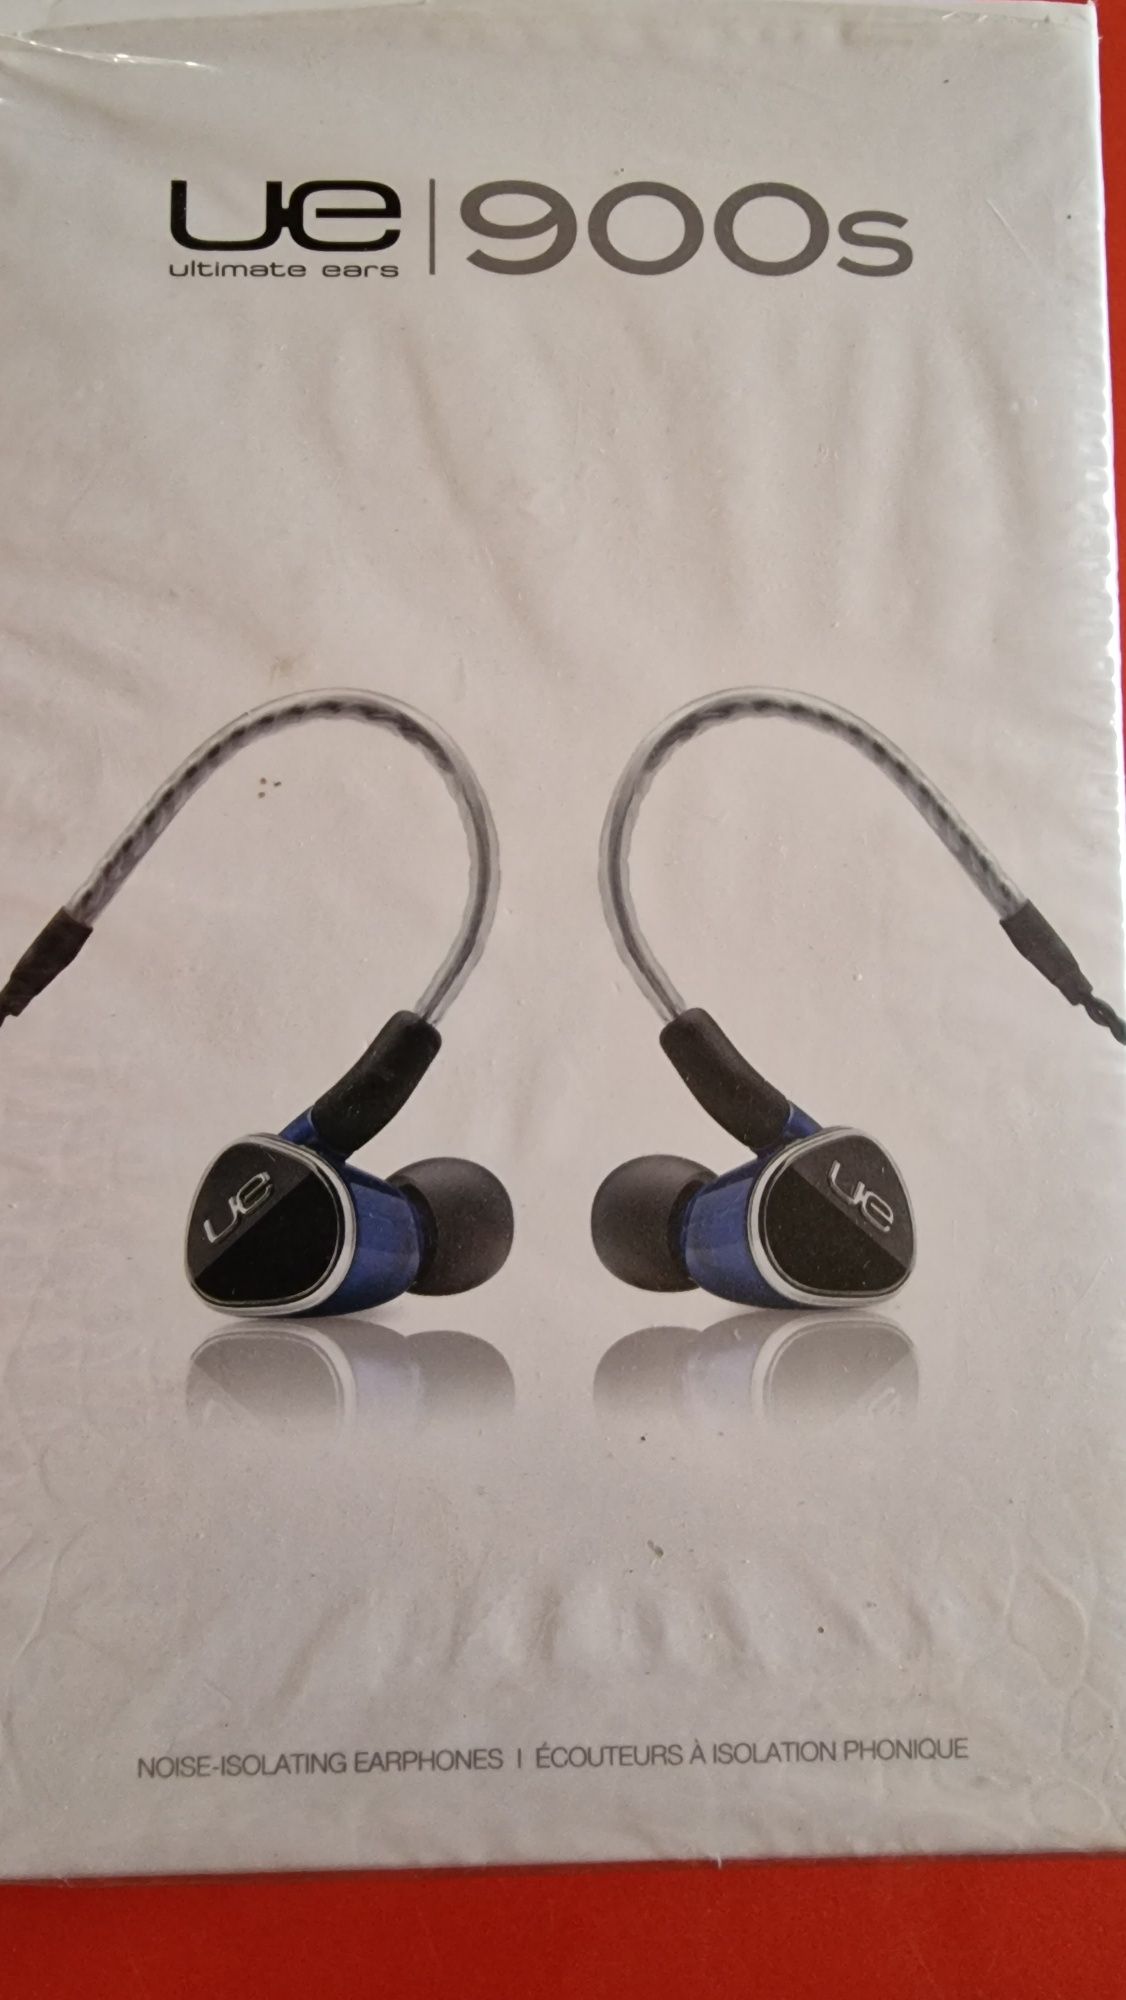 Ultimate ears 900s.обмен fiio astell&kern dunu ibasso